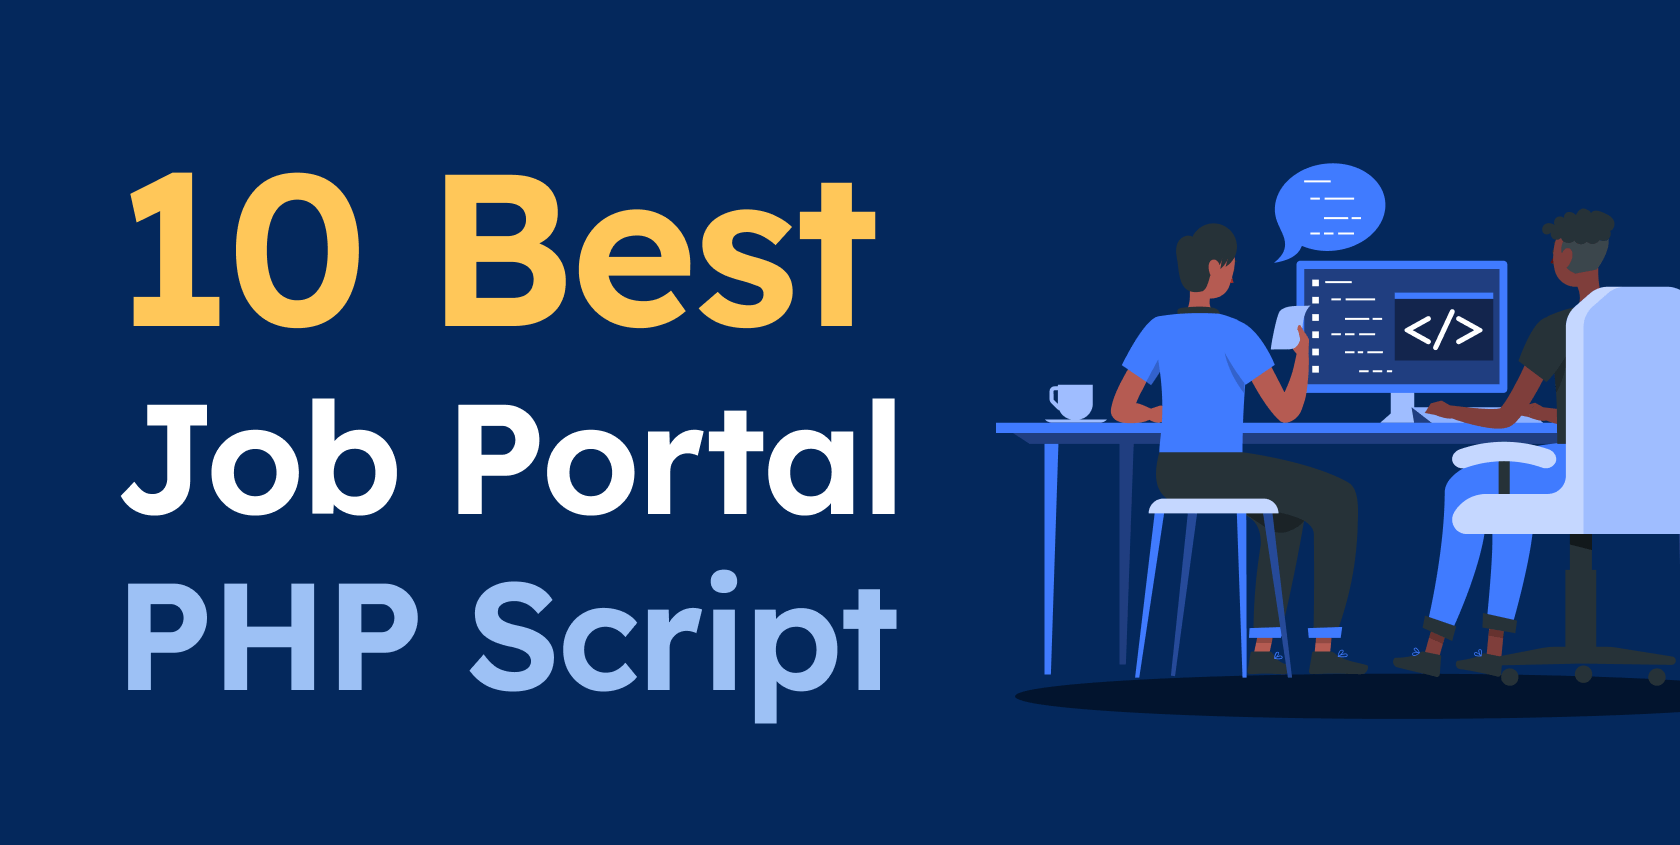 10 Best Job Portal PHP Script